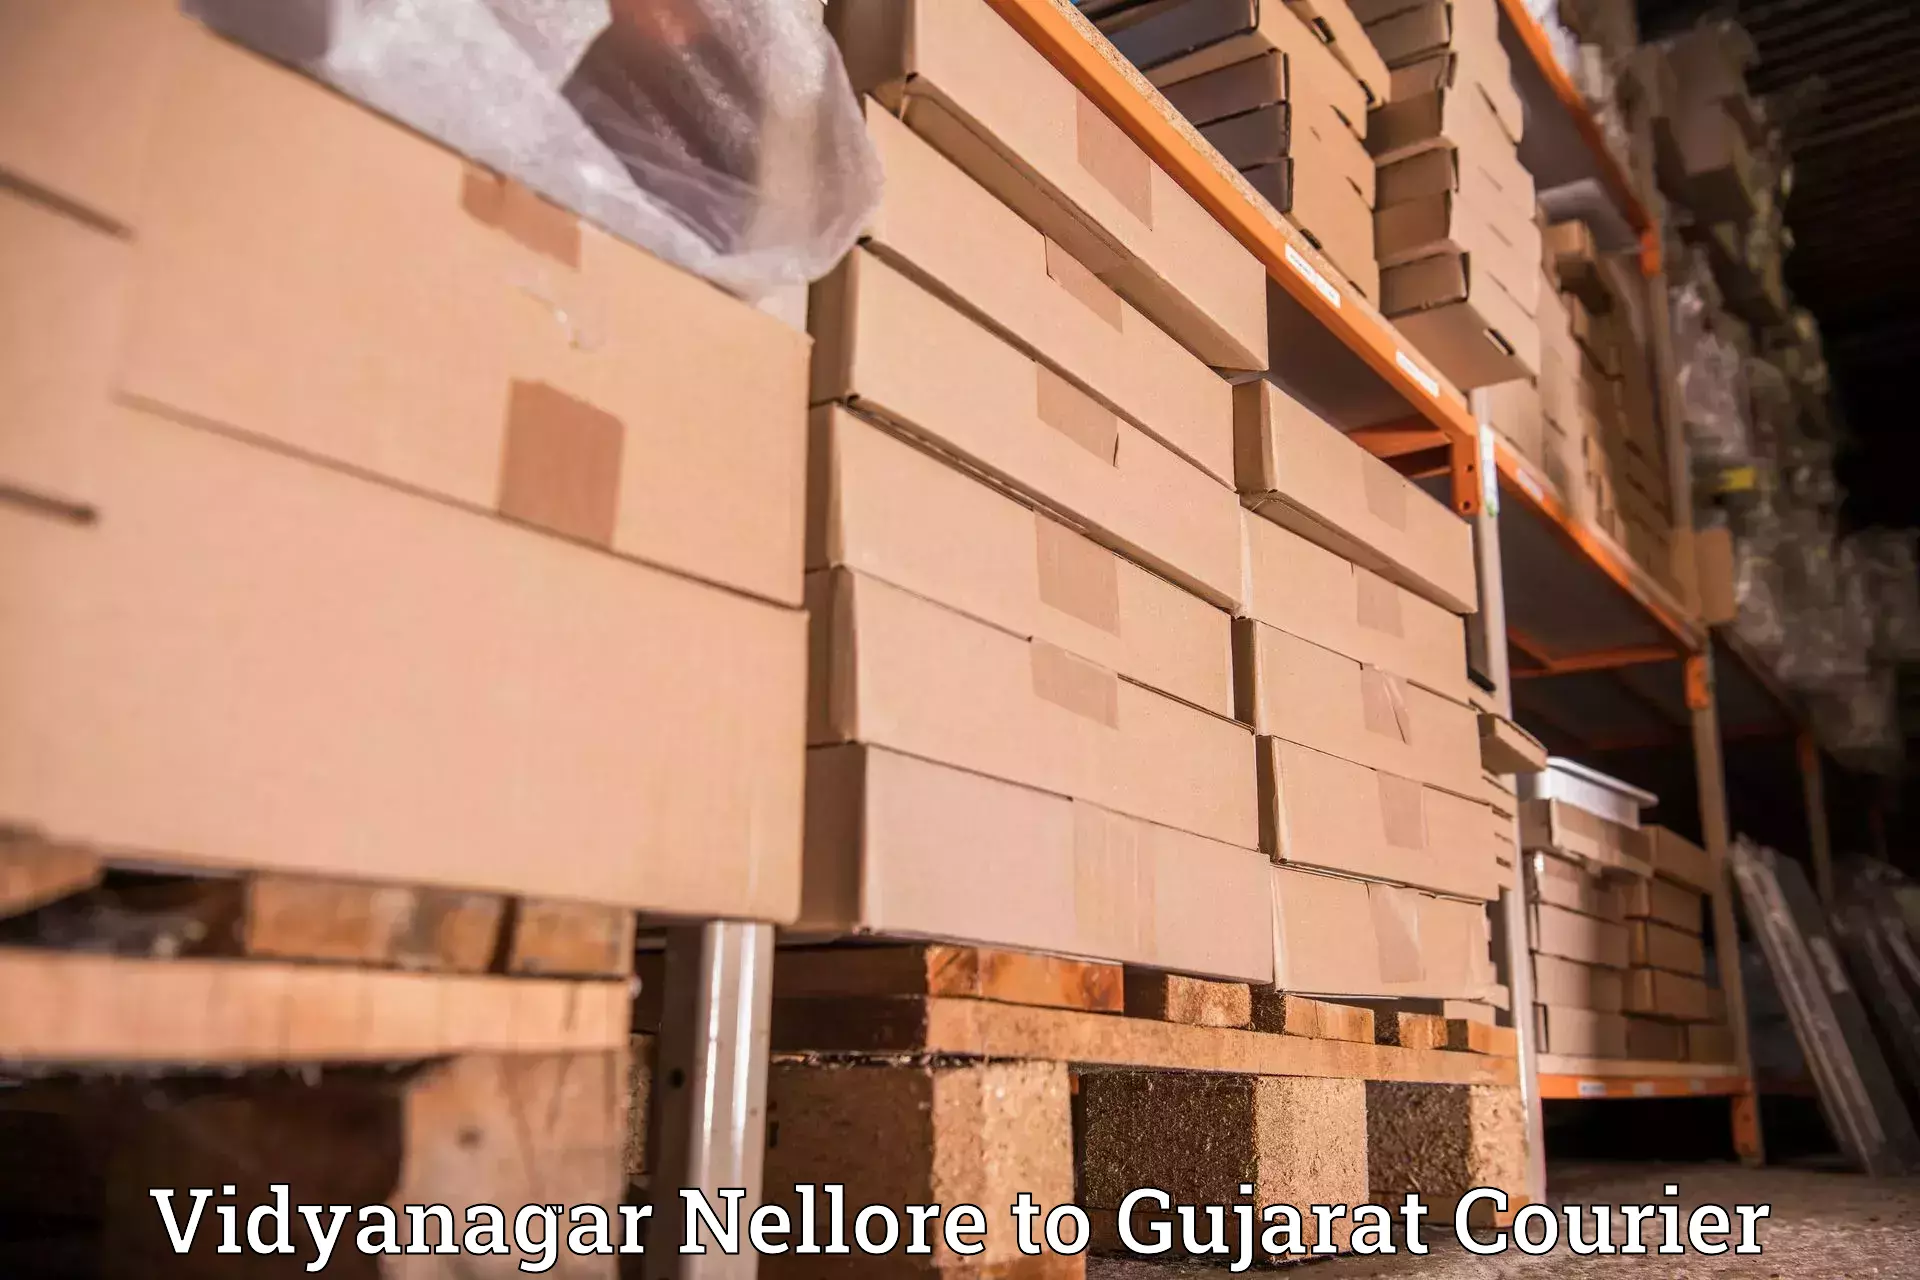 Nationwide parcel services Vidyanagar Nellore to GIDC